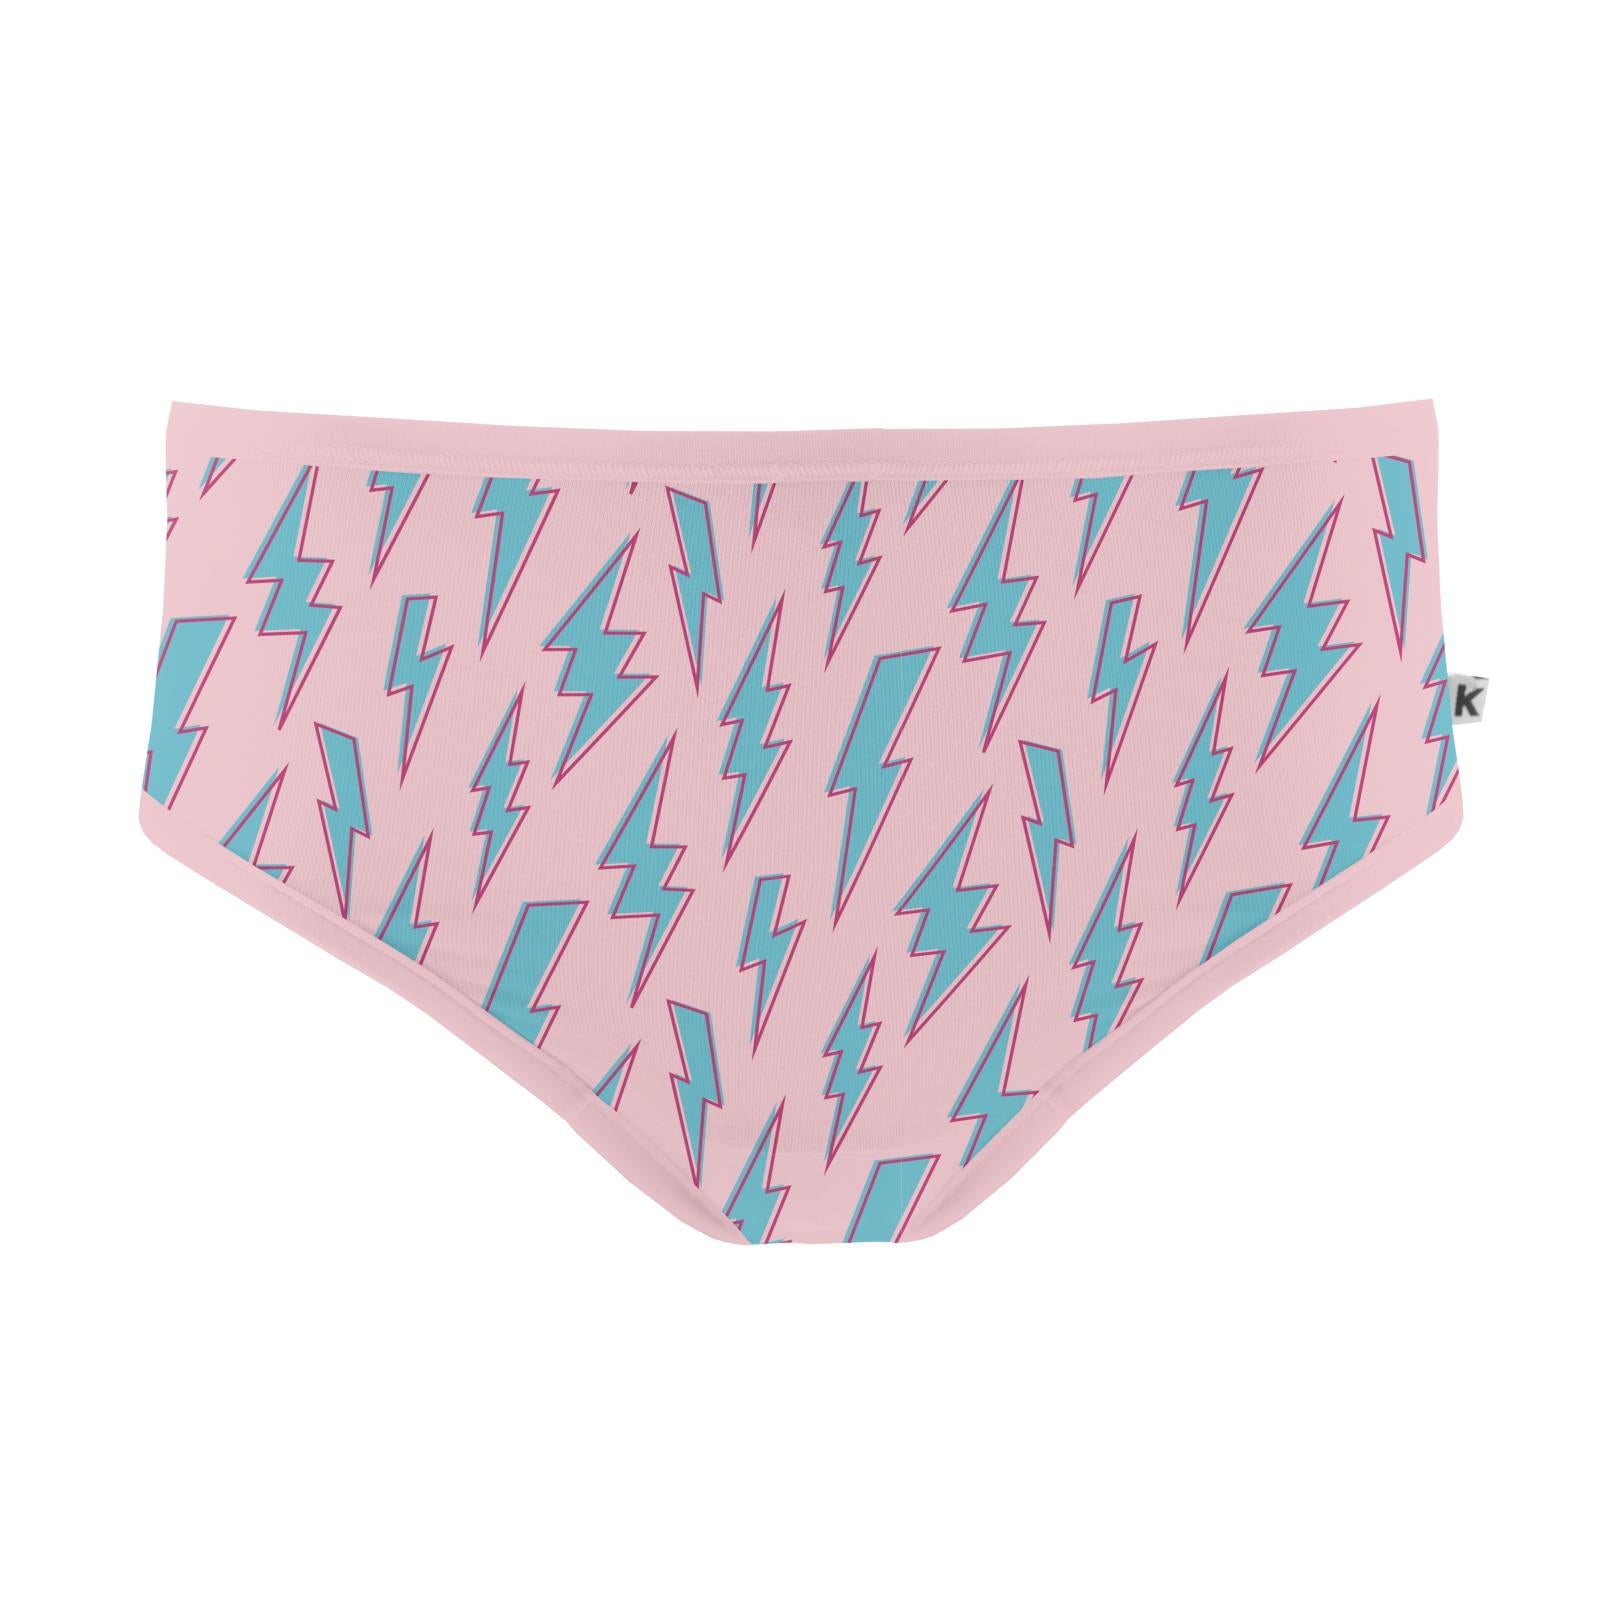 Kickee Pants Girls Print Underwear Set of 3 - Calypso Splatter Paint,  Confetti, Lotus Lightning